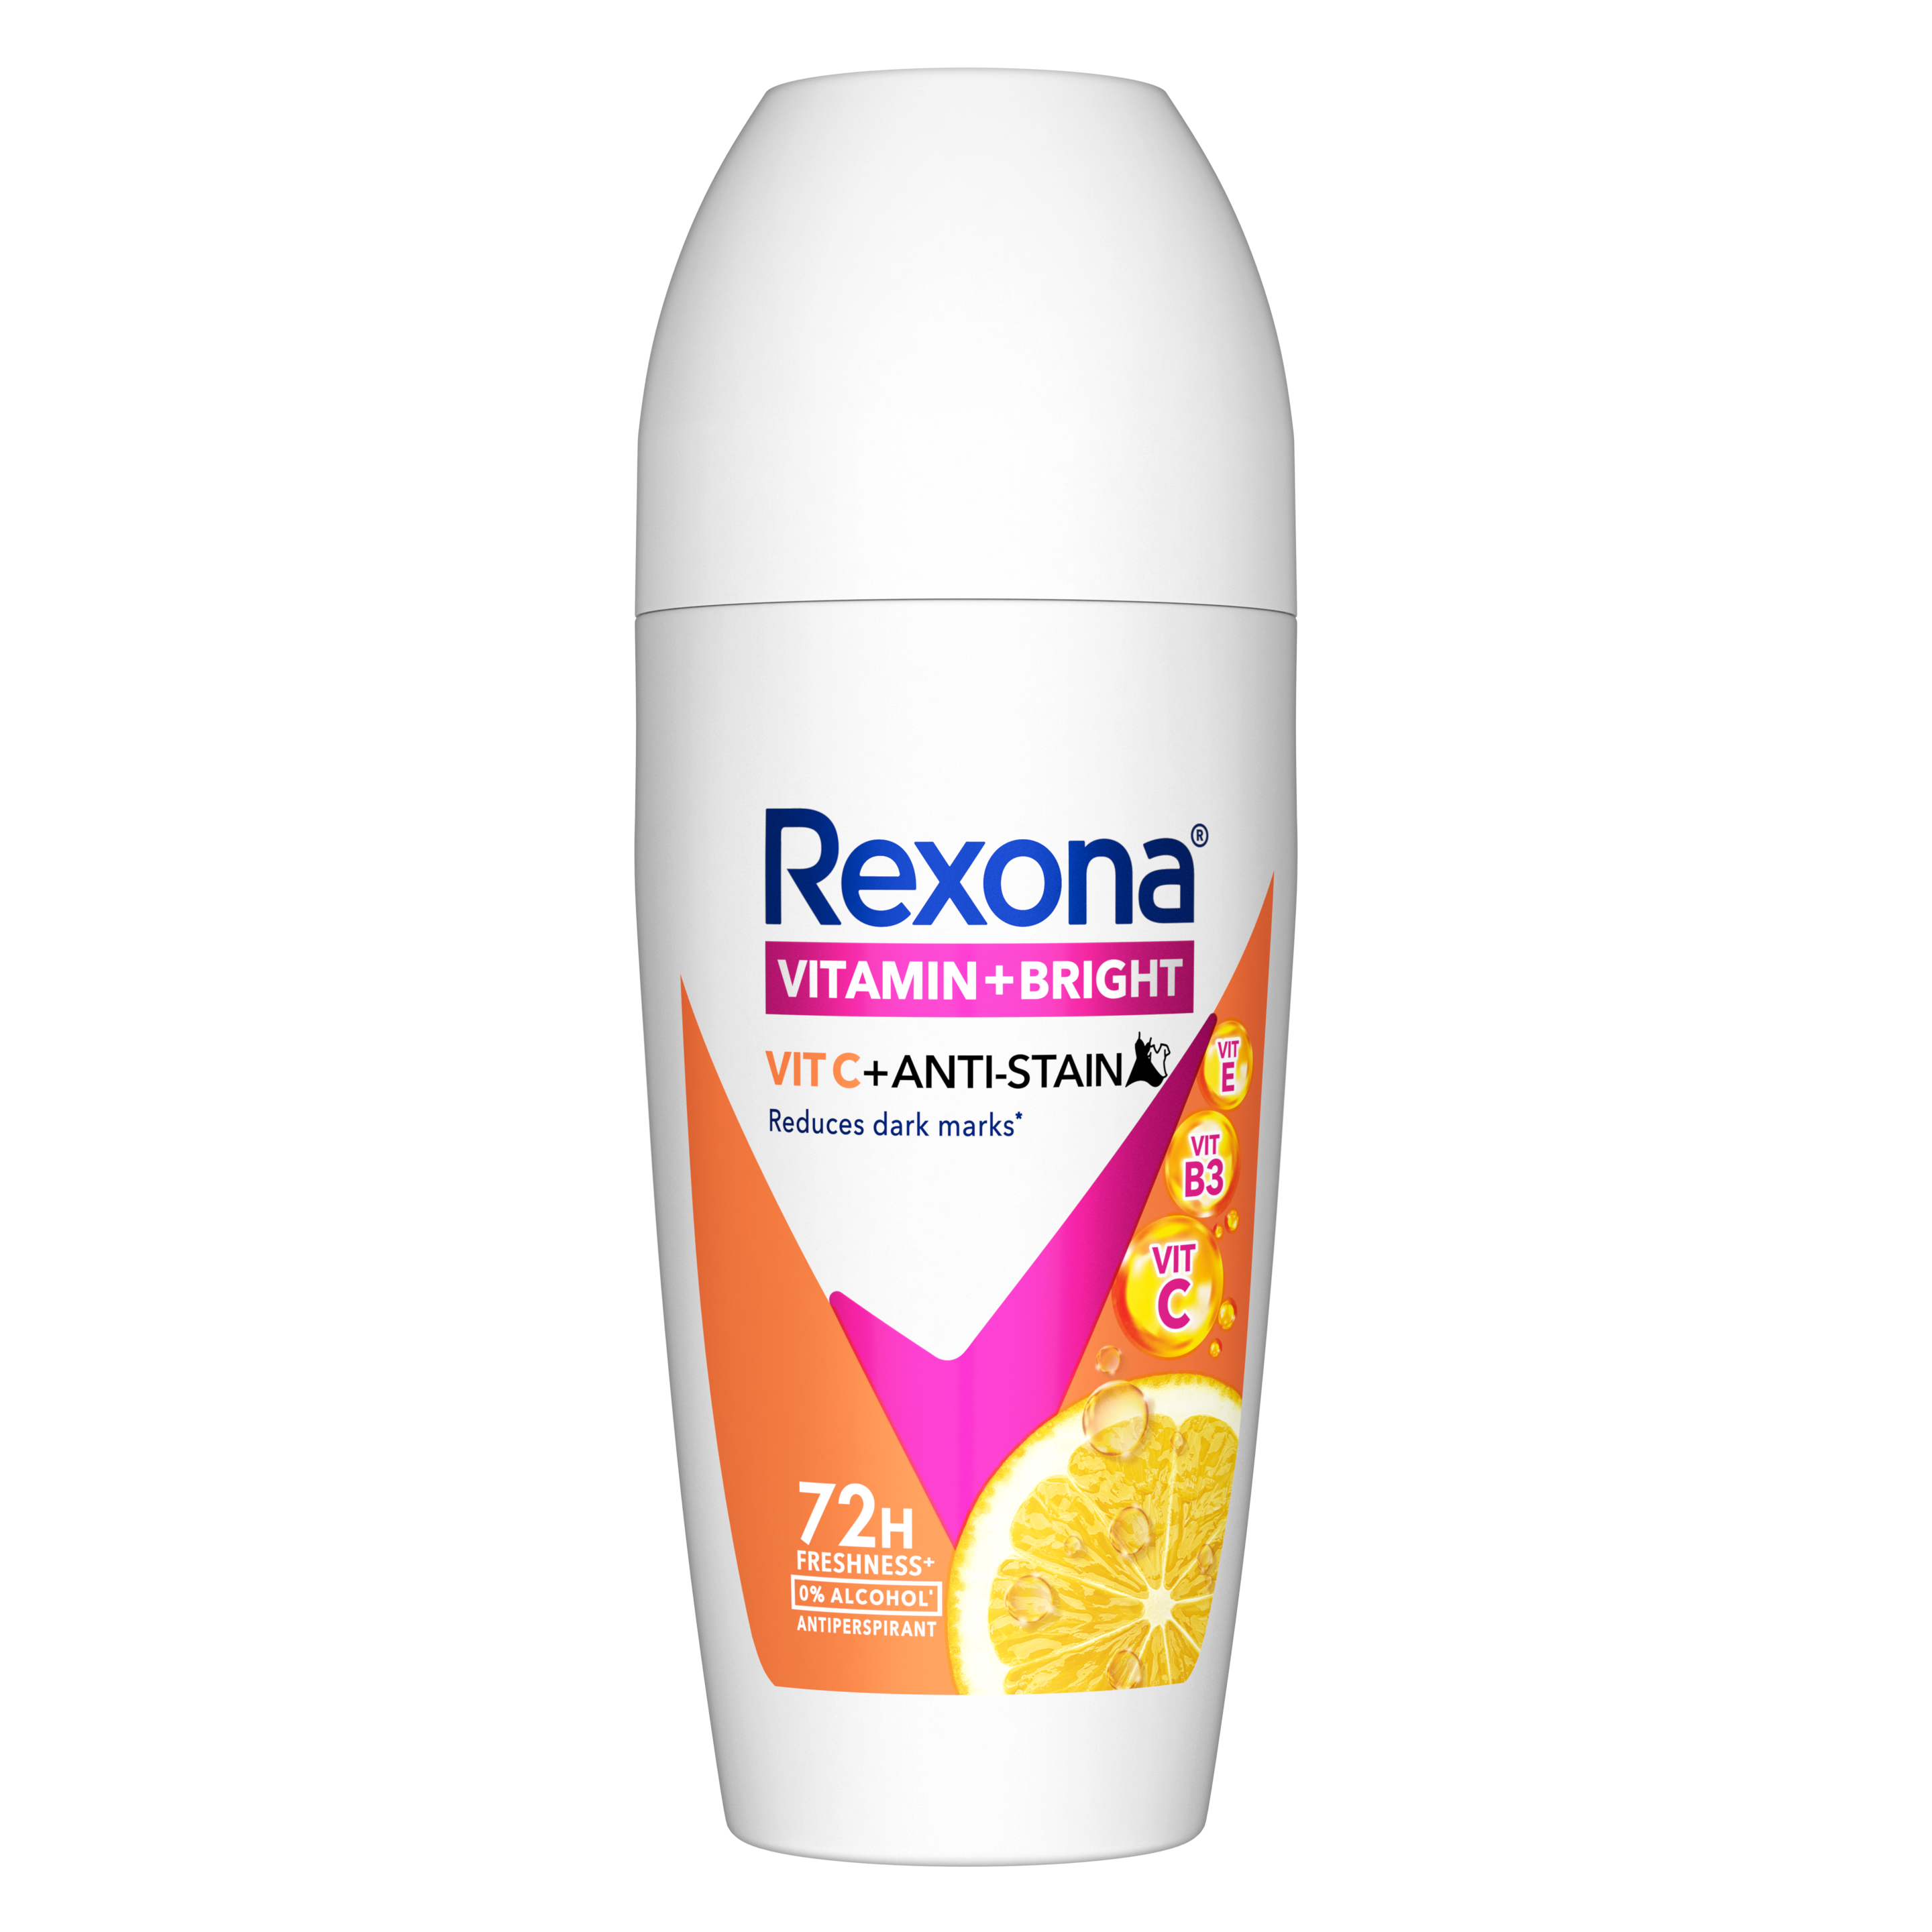 Rexona Vitamin+Bright Vitamin C + Anti-Stain Roll On